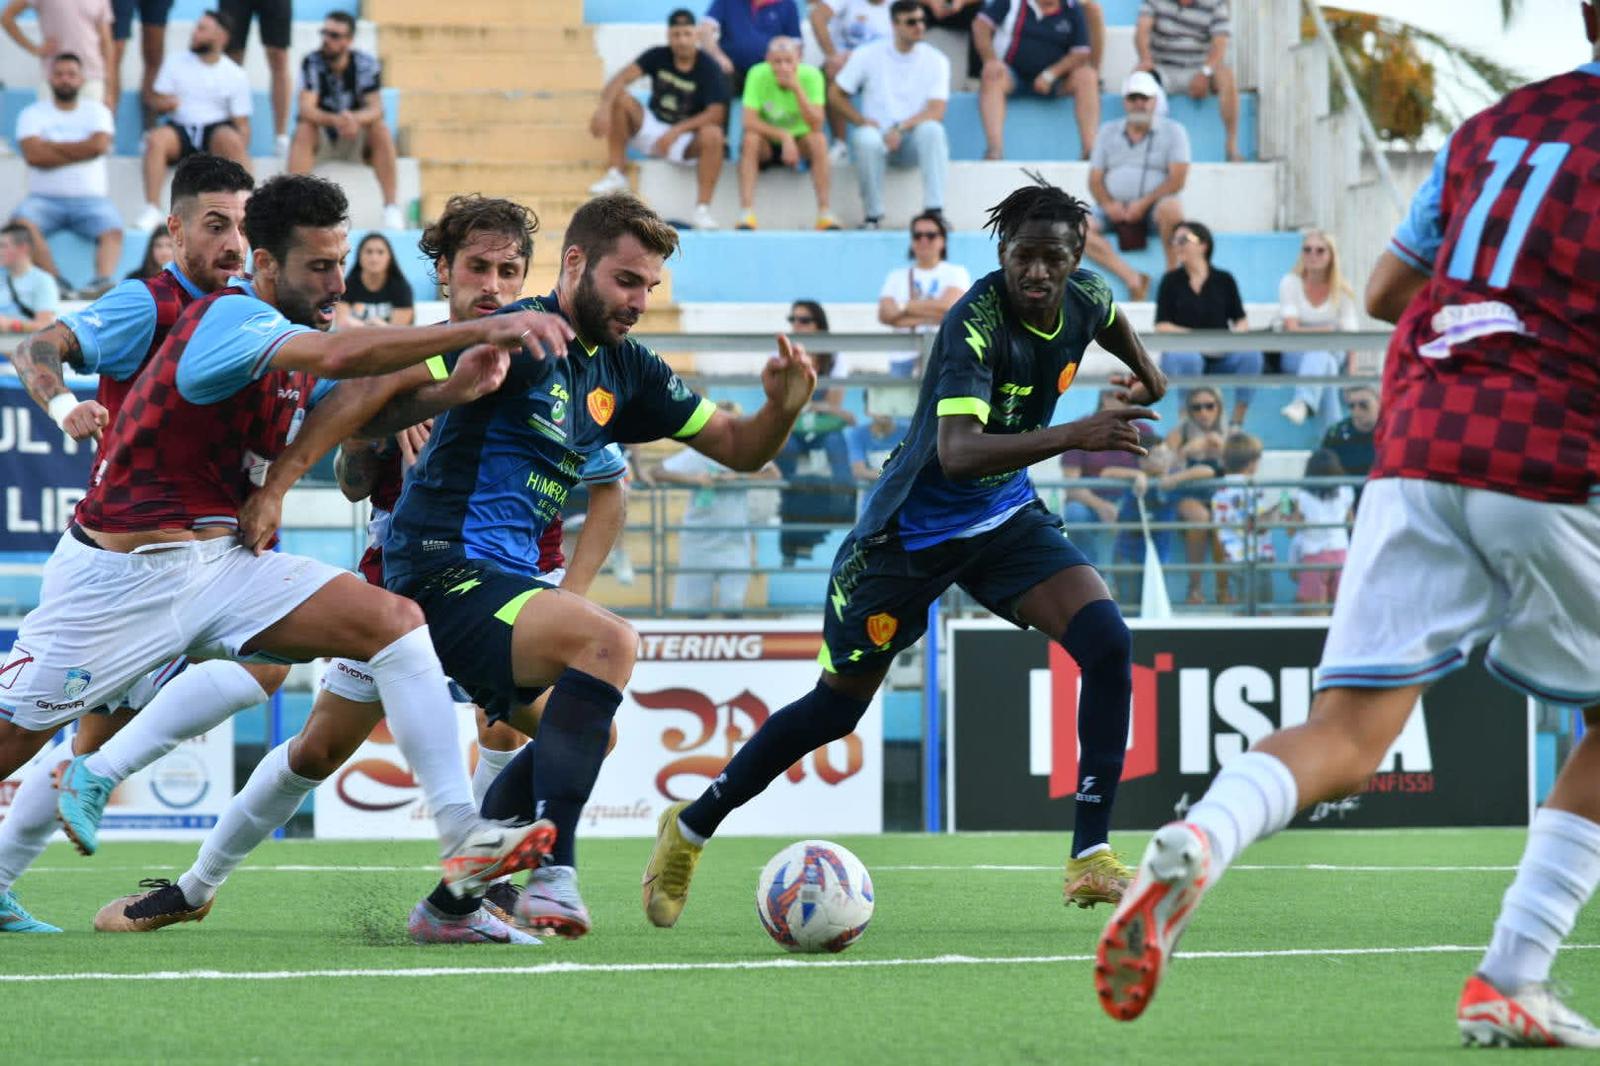 Serie d, Manfredonia 1-1 Santa Maria: Gaeta risponde a Konate